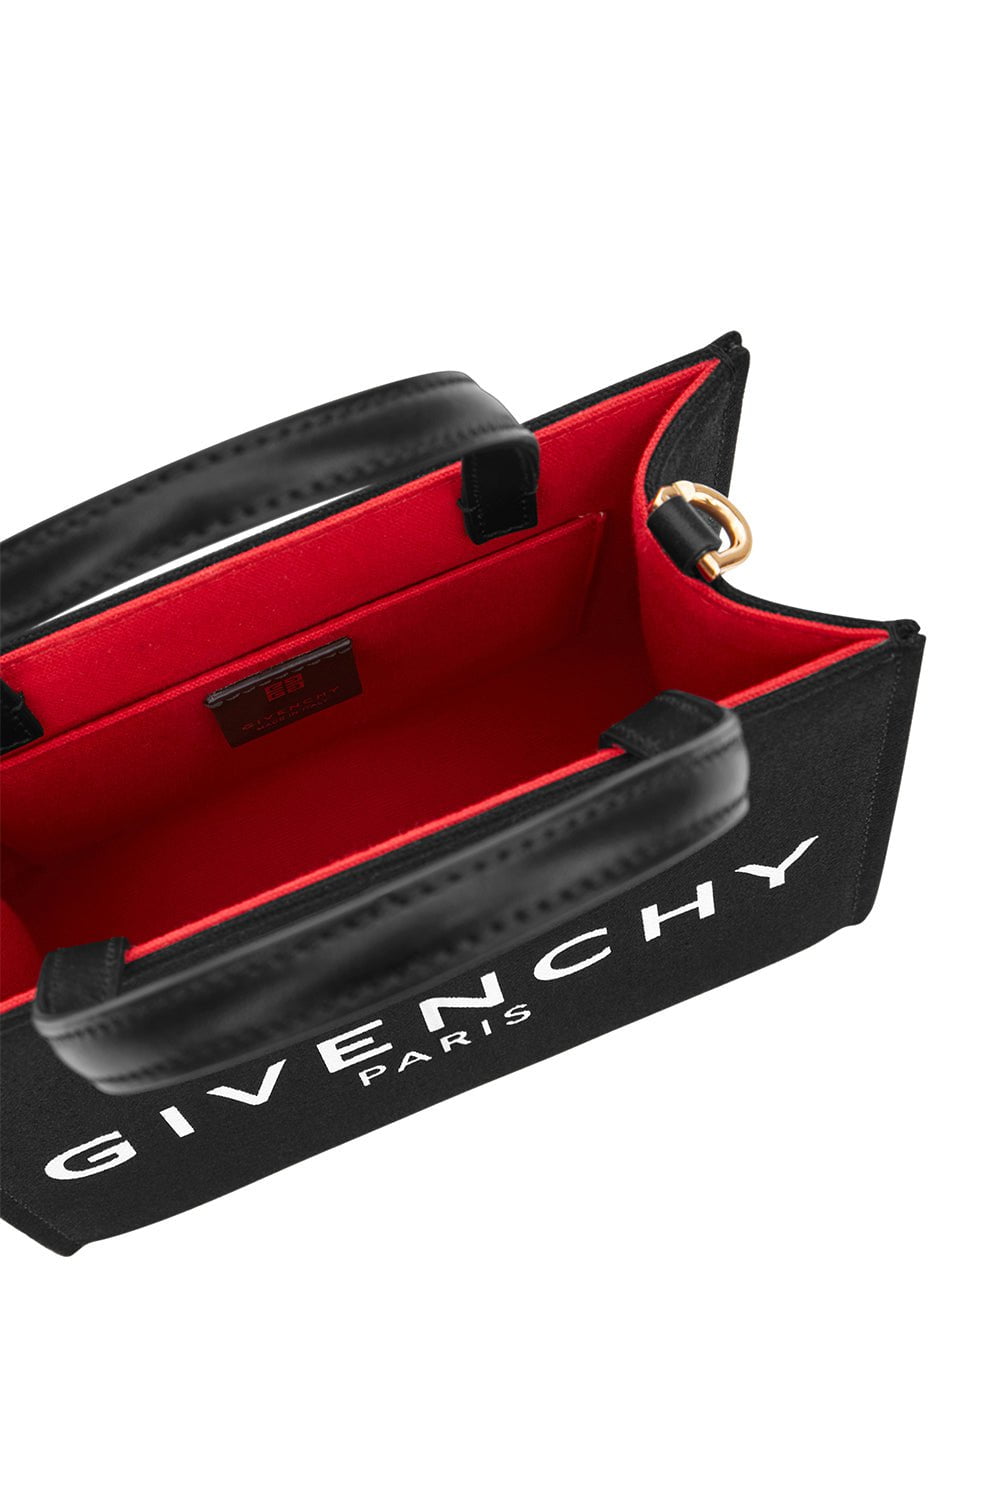 GIVENCHY-Mini G-Tote Shopping Bag-BLACK